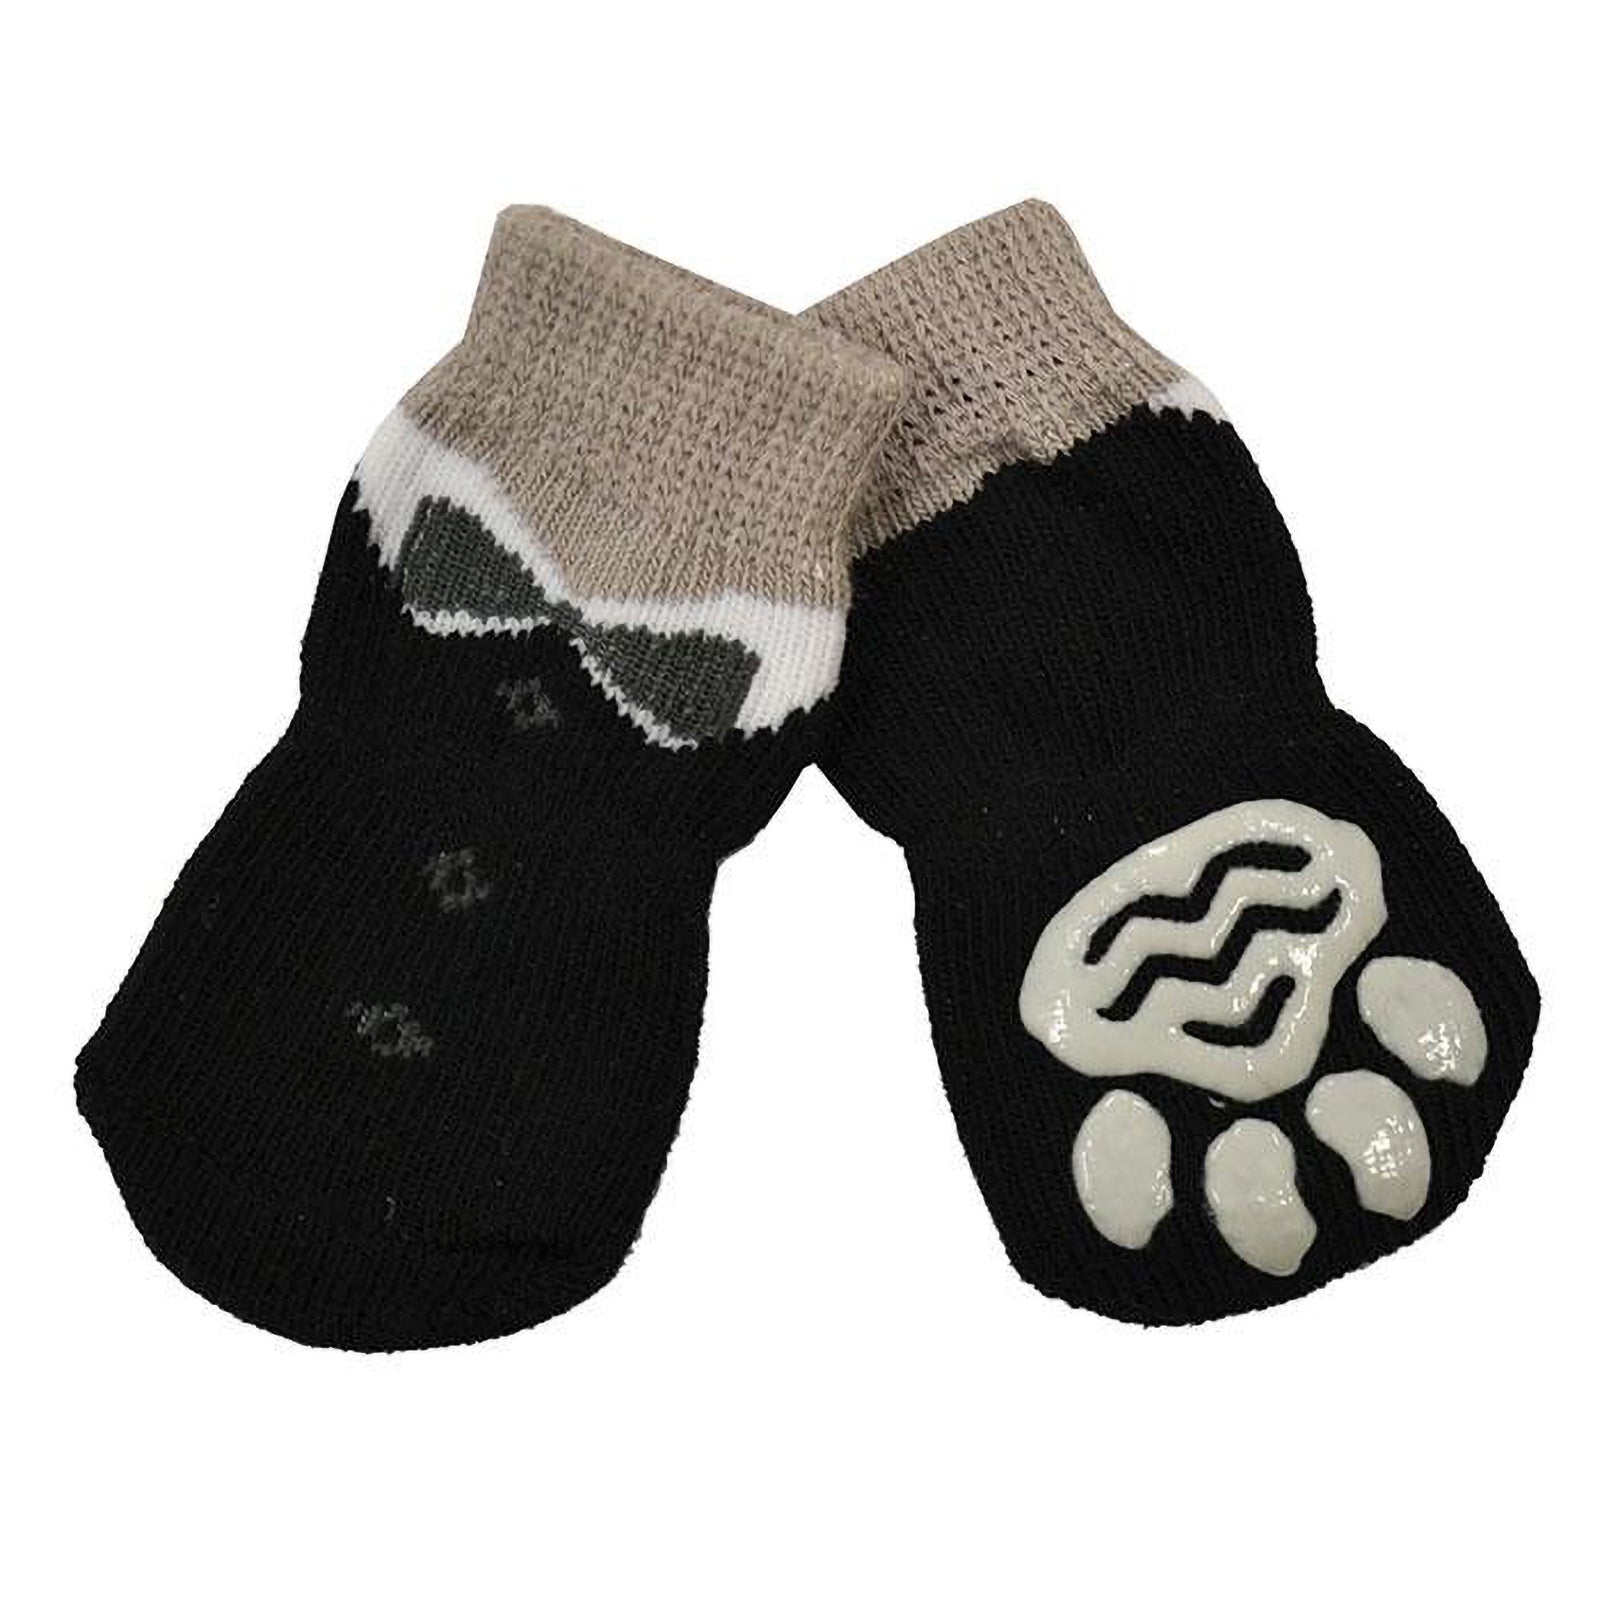 Buy Zeez Non-Slip Dog Socks Online